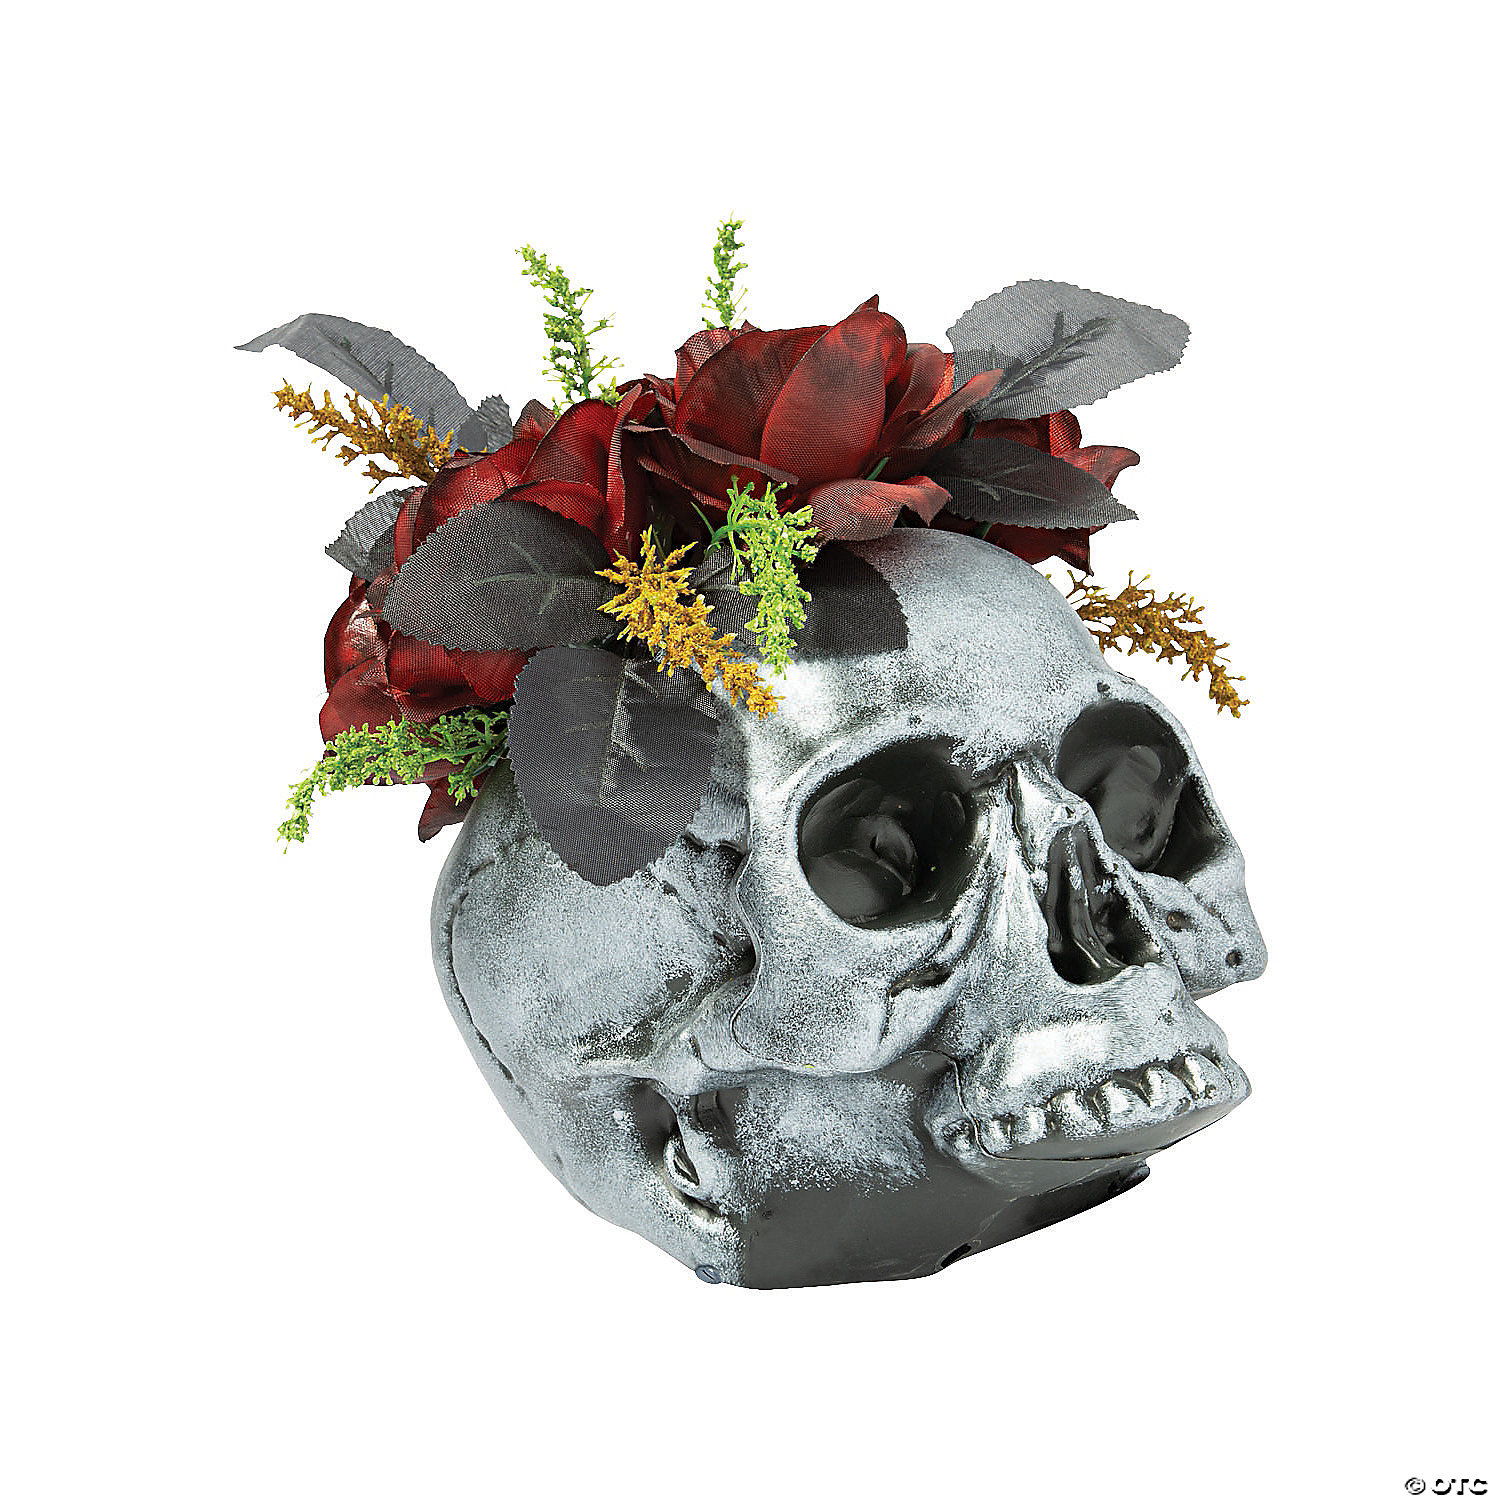 Rose and skull arrangement Hallowedding Mardi Gras centerpiece skull centerpiece Halloween decoration Halloween table decor